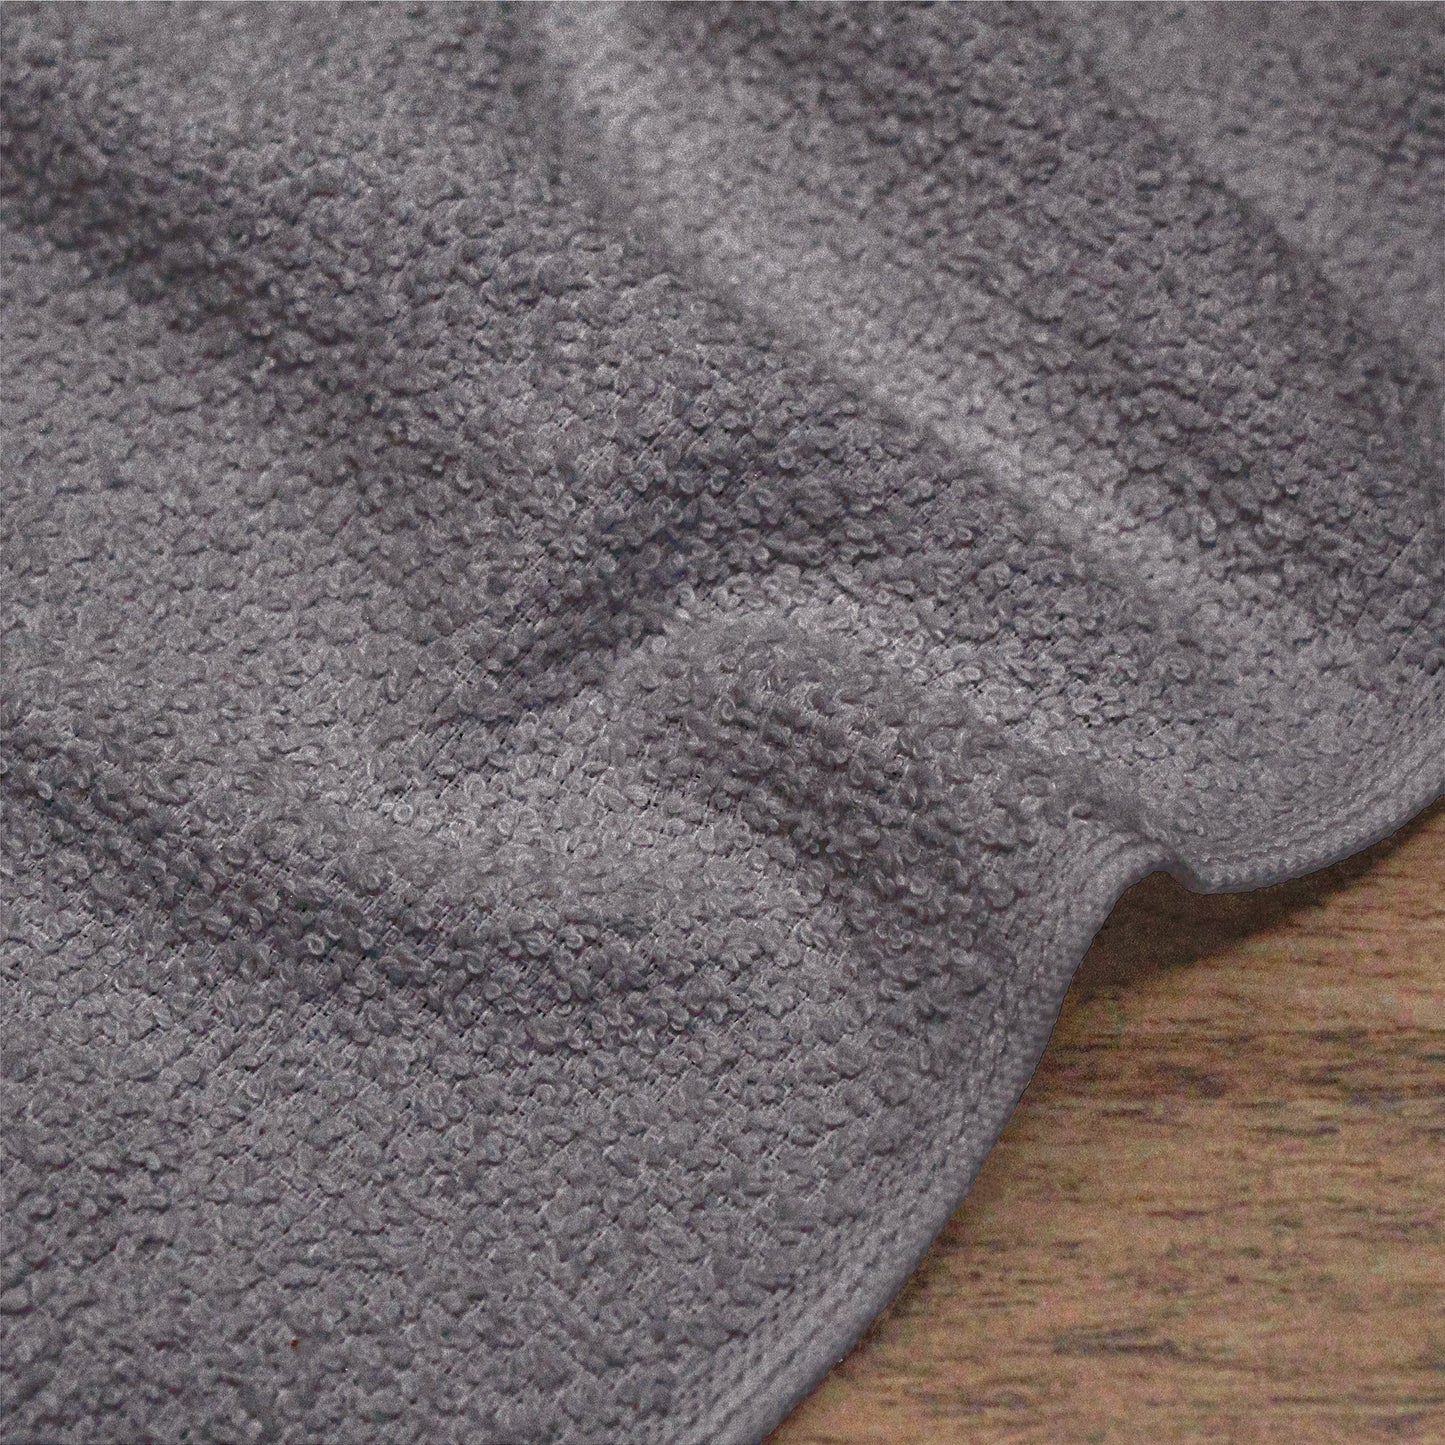 BleachSafe® Ultra Absorbent Waffle Design Kitchen Towel 6Pack